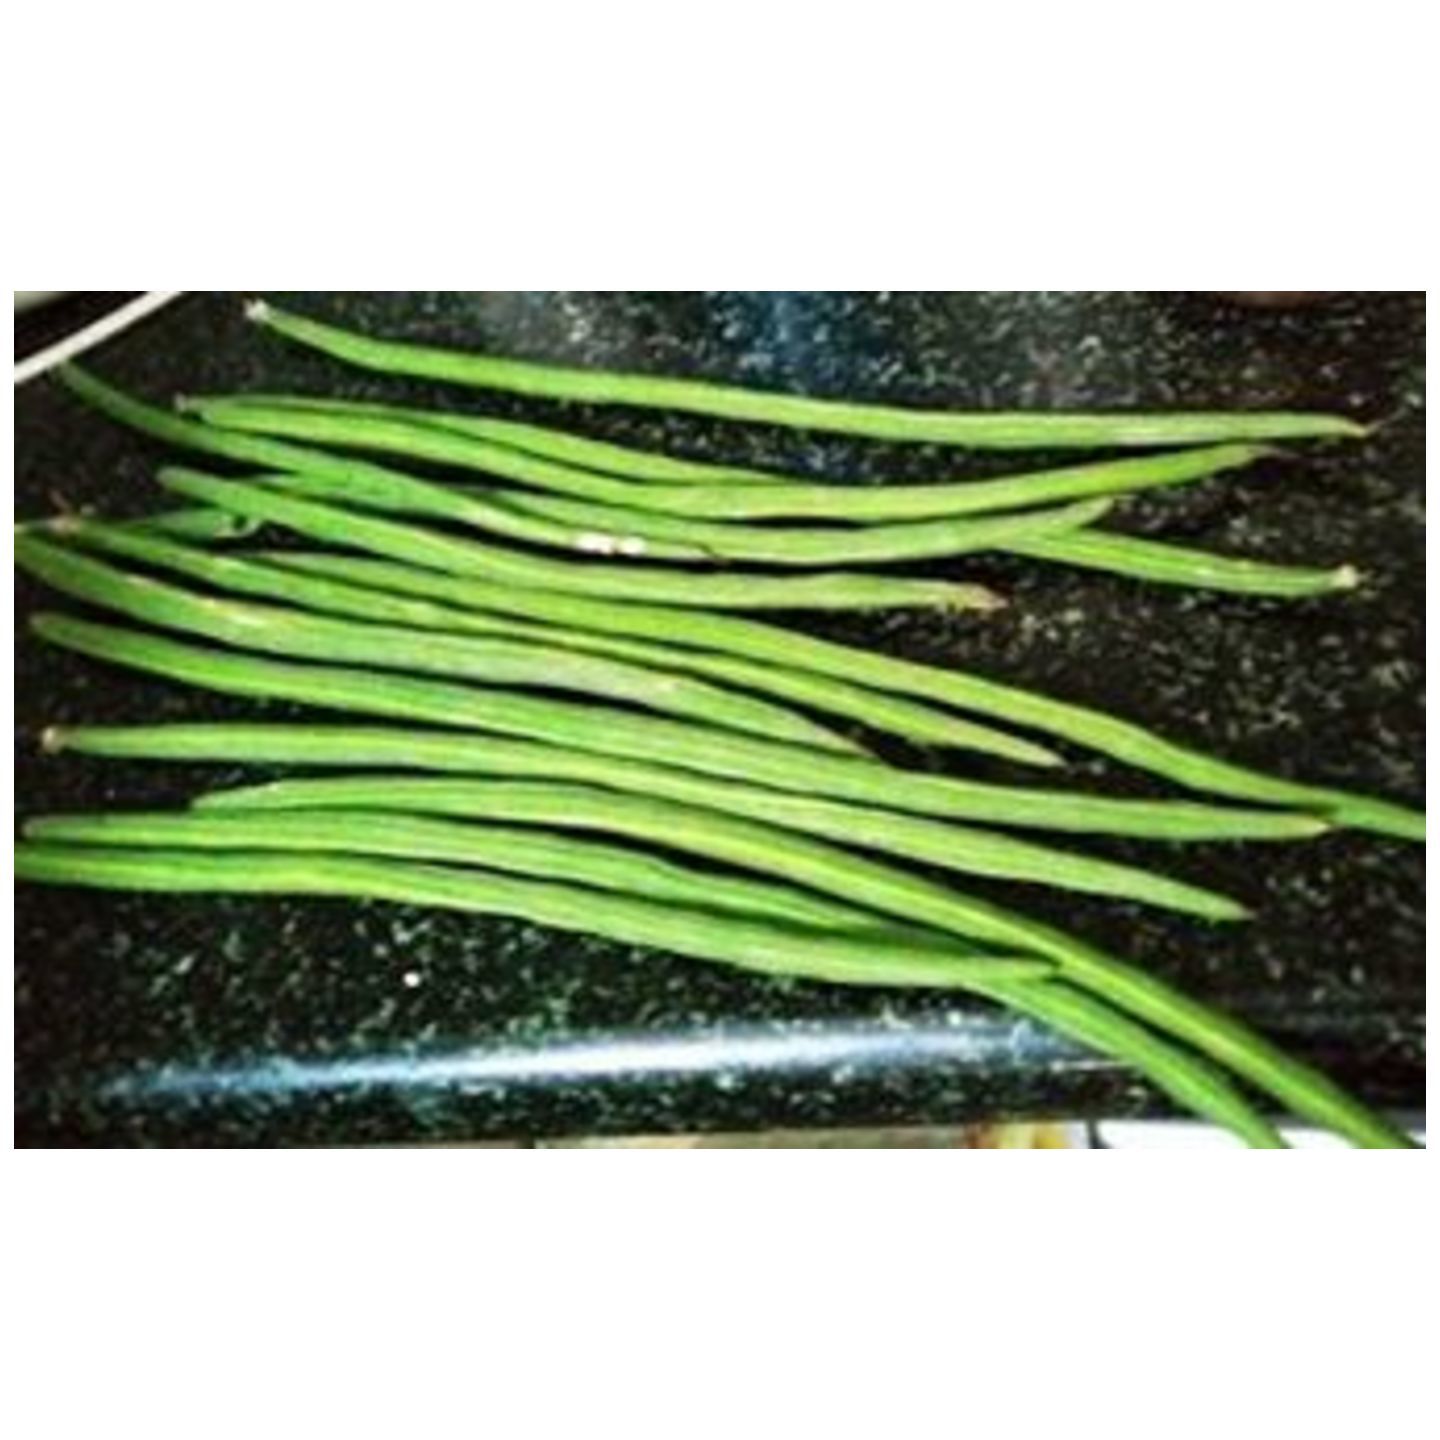 MHG-VEG-Drumsticks Moringa Seeds - 5 seeds